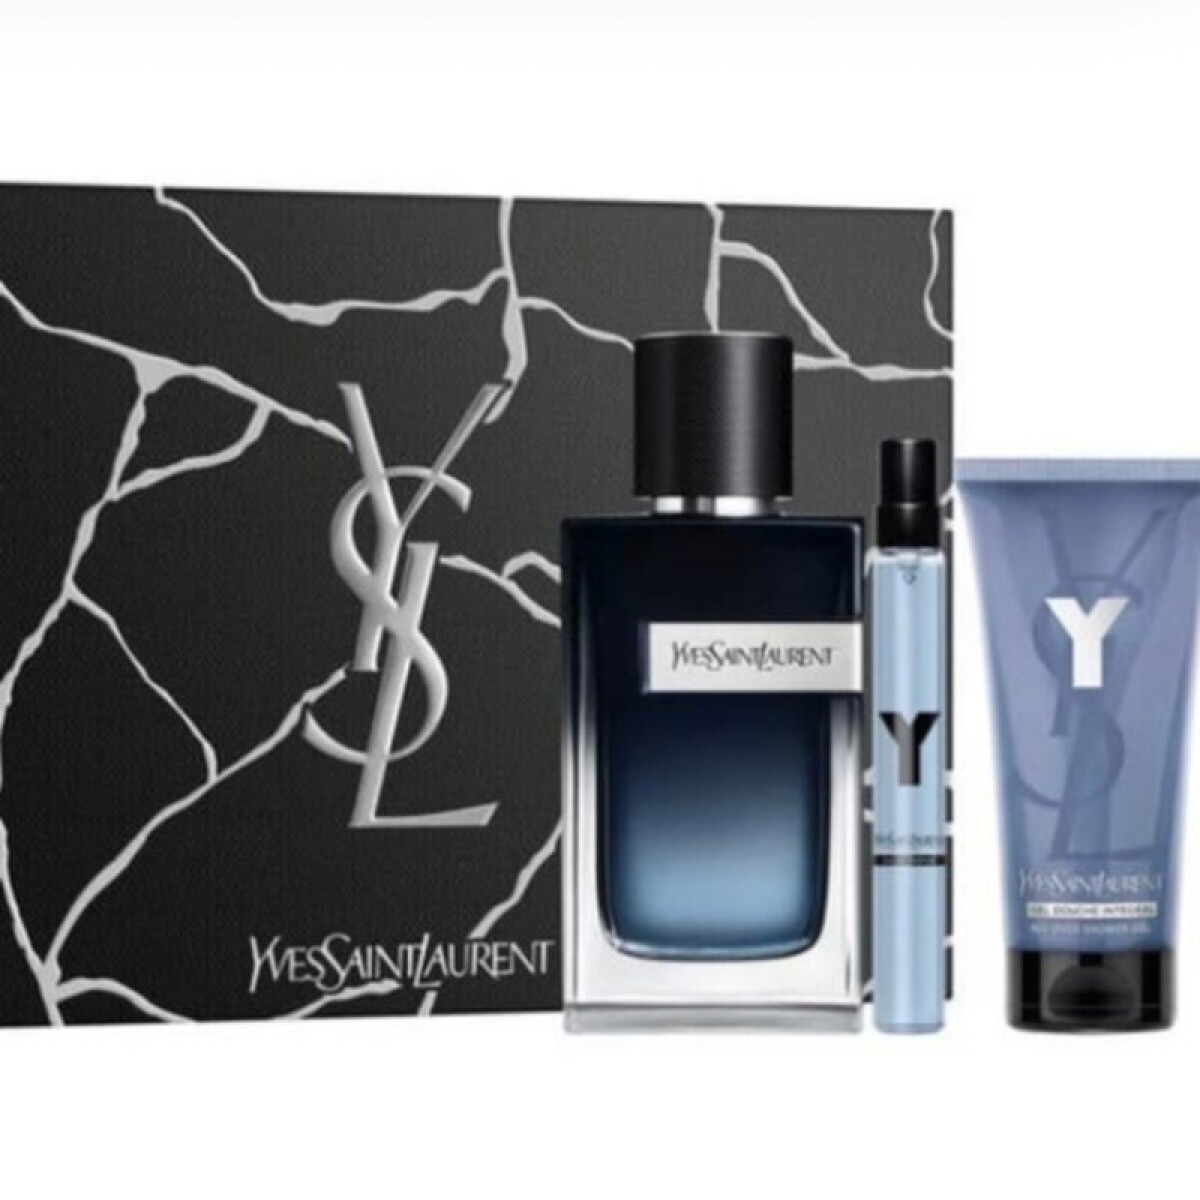 Set Perfume Yves Saint Laurent Edp 100ML + Gel de Ducha - 001 